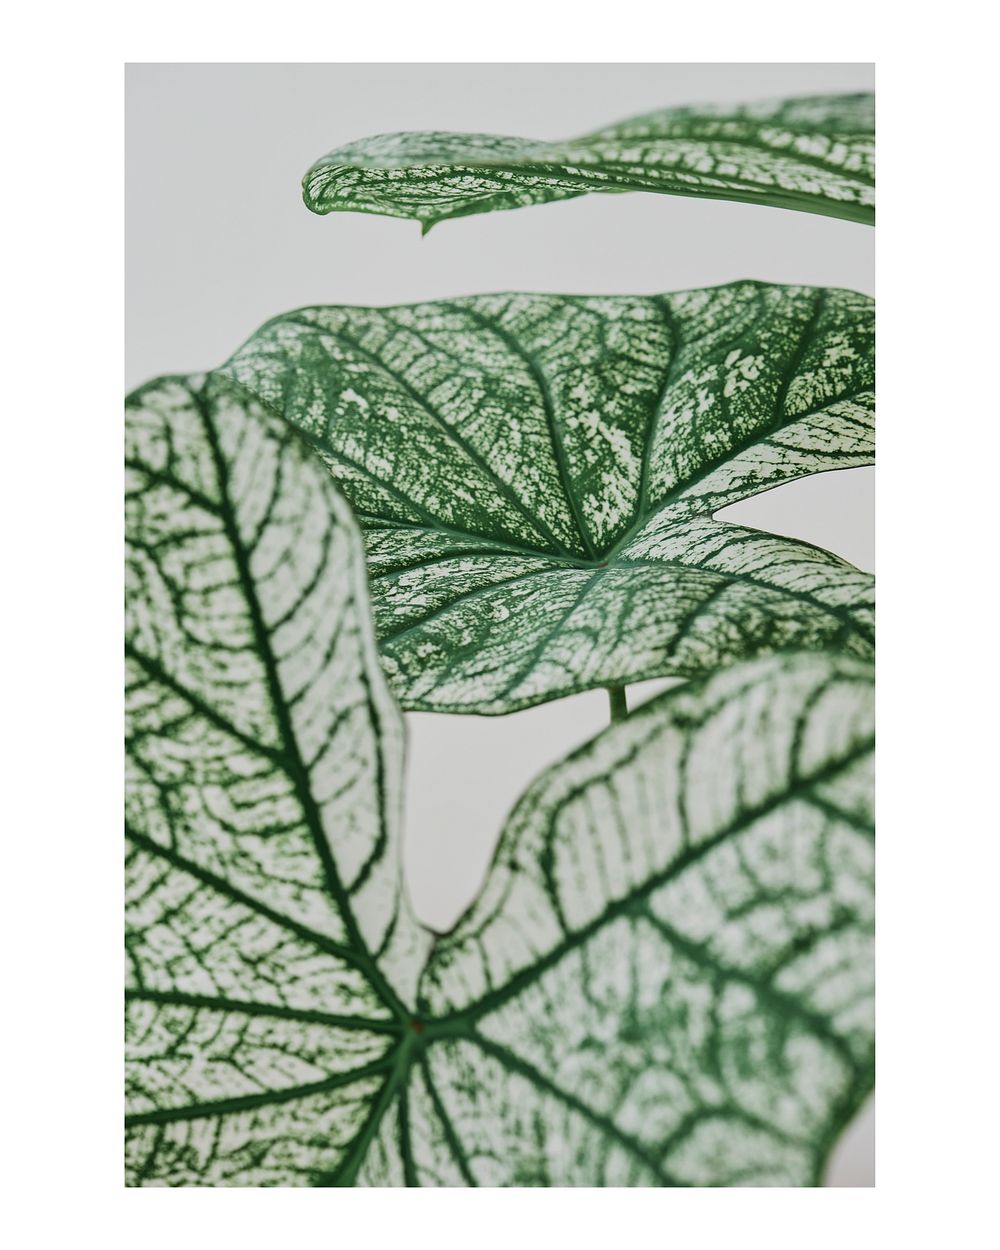 Aesthetic leaf texture art print, macro shot, wall decor